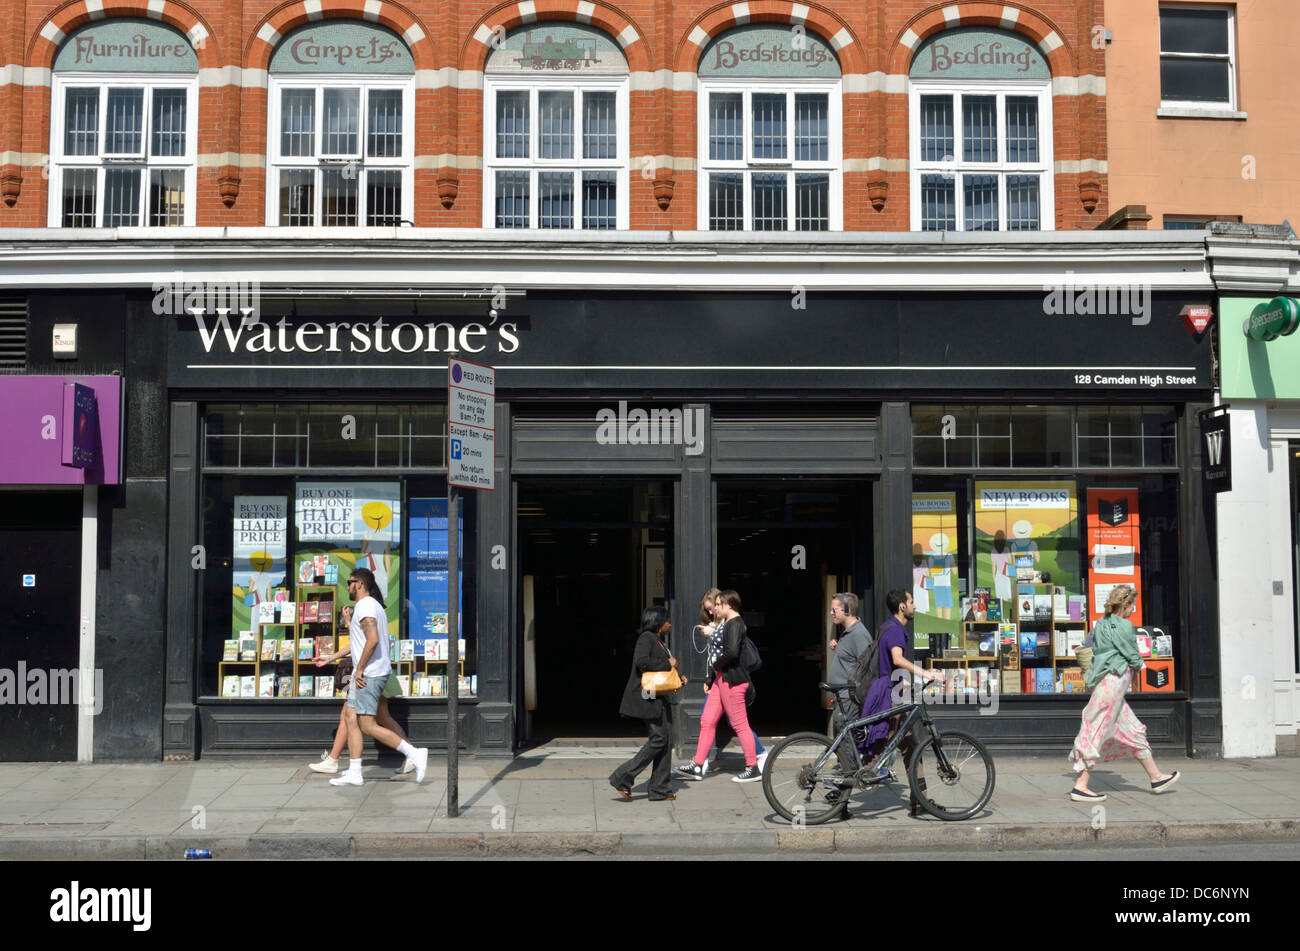 Waterstone's bookshop in Camden High Street, Camden Town, Londra, Regno Unito. Foto Stock